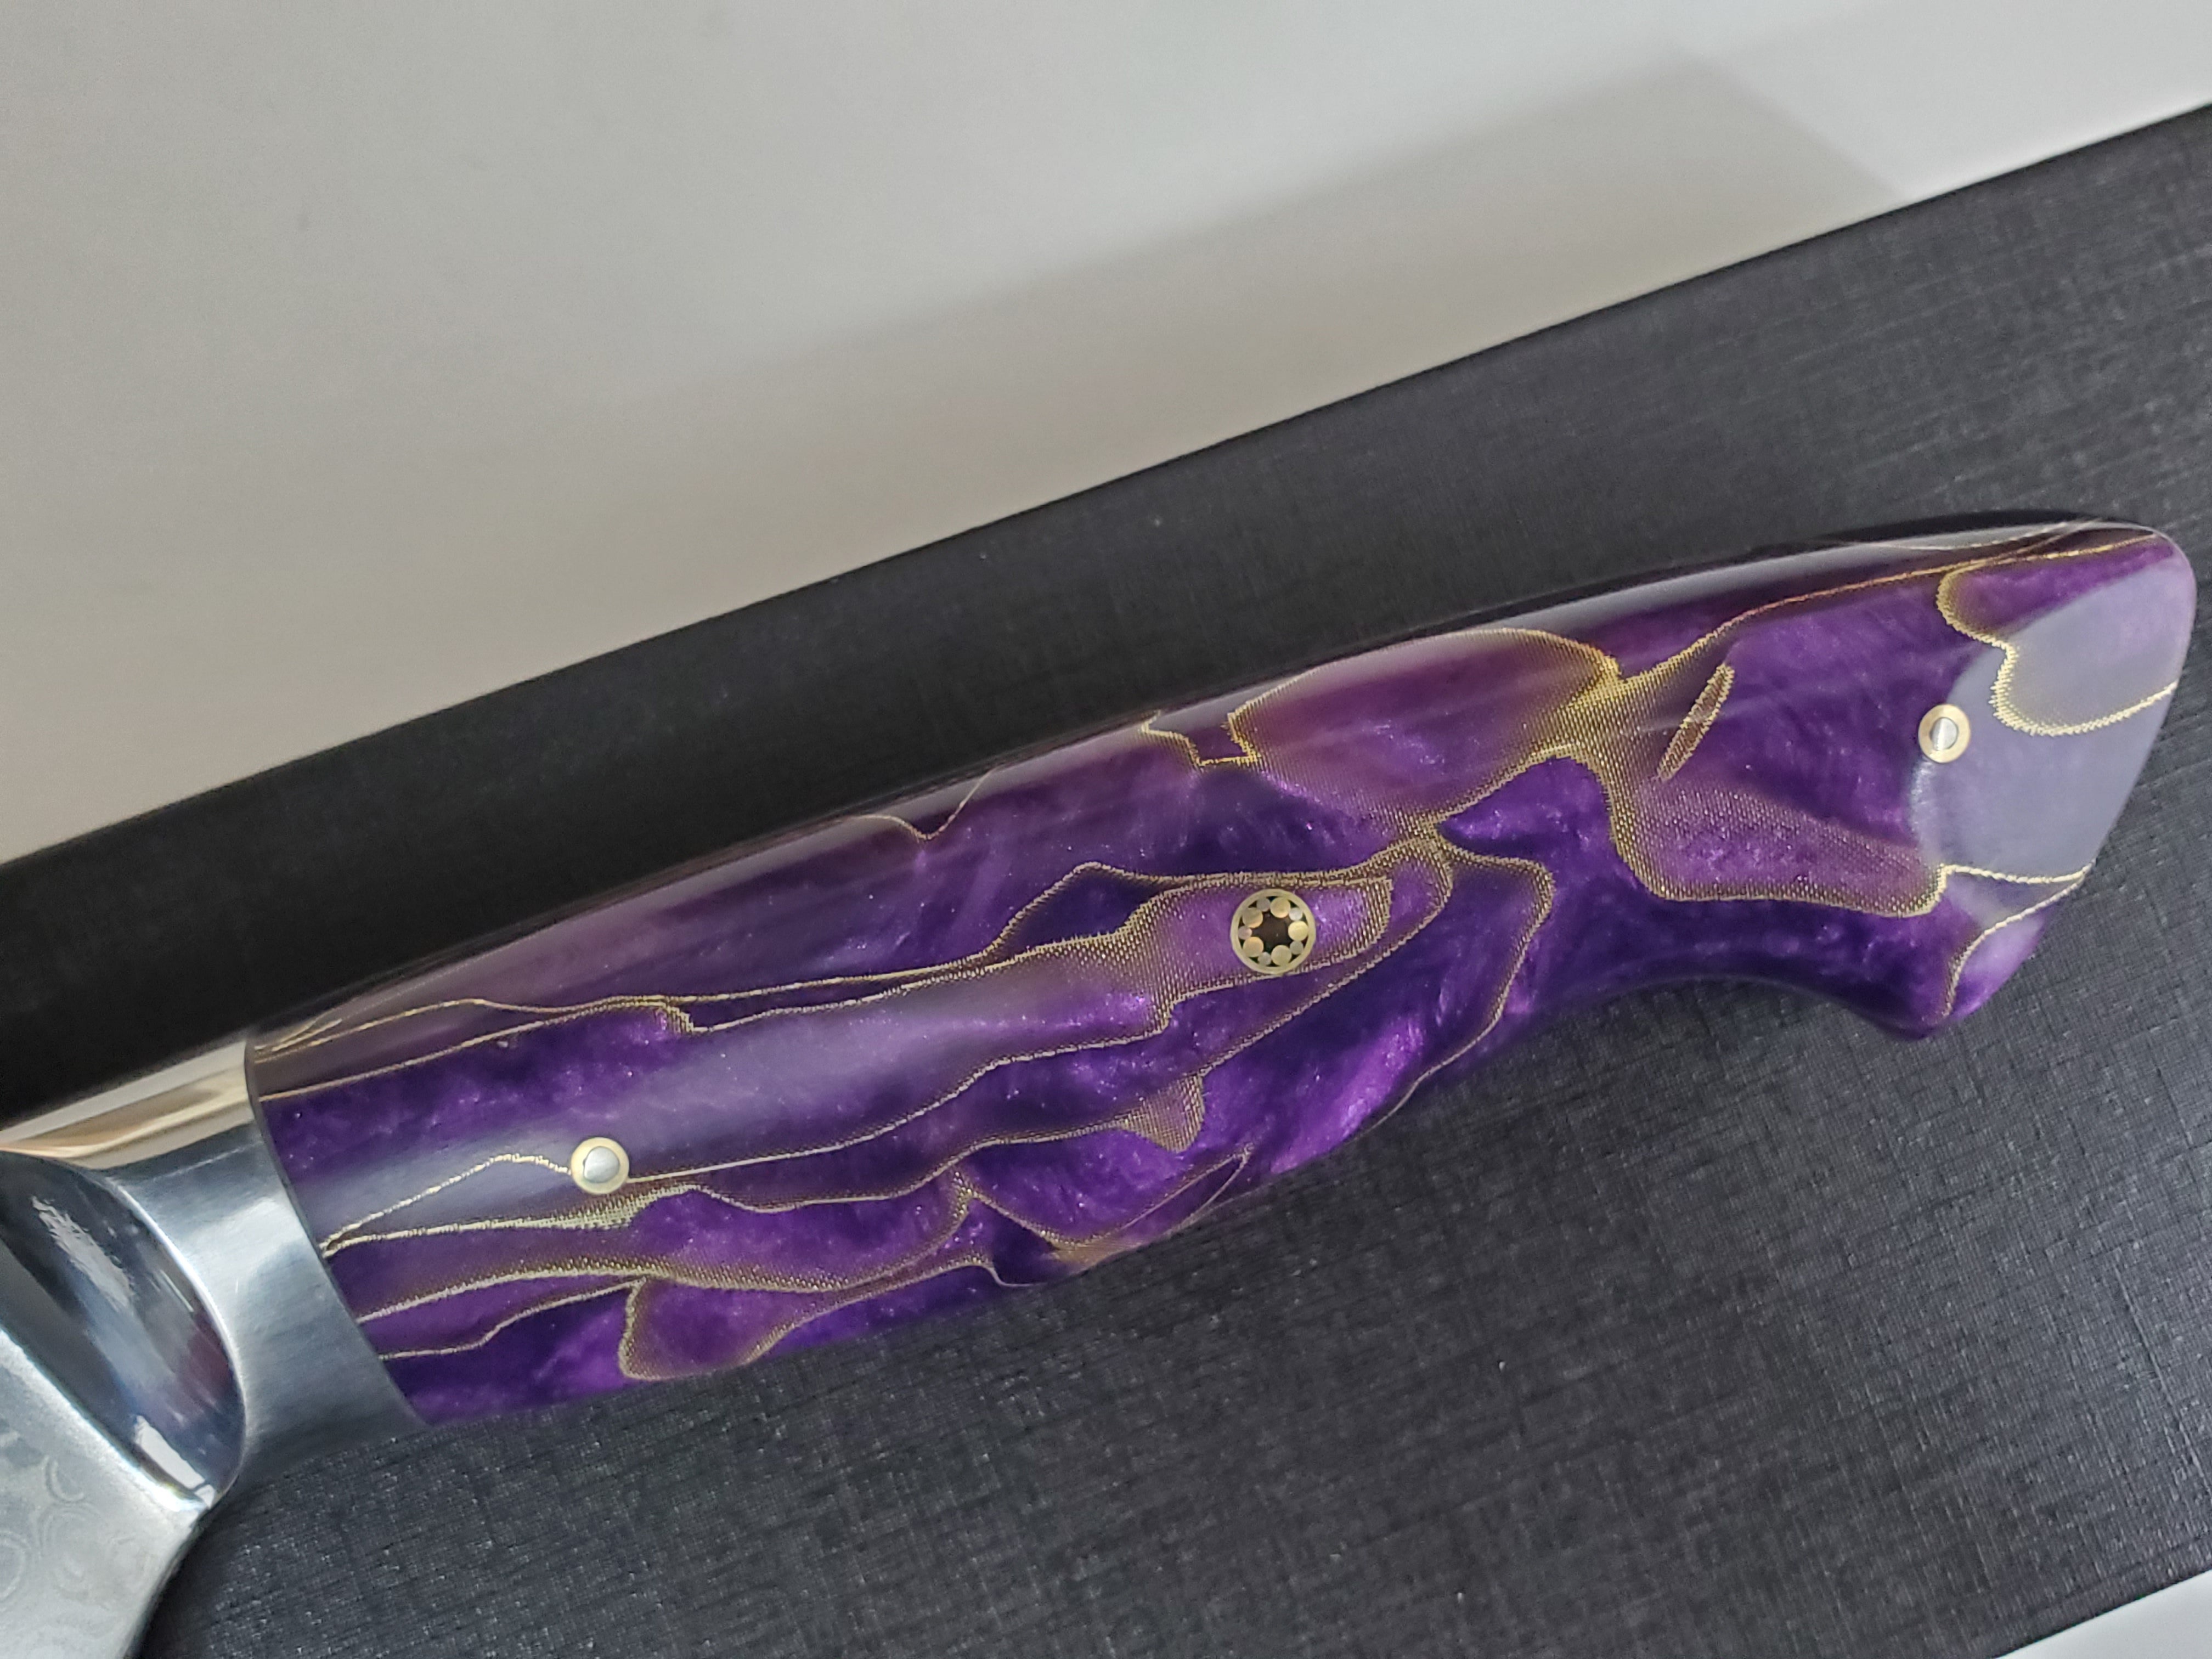 Paring Knife Colori, Purple - Bulk order online now